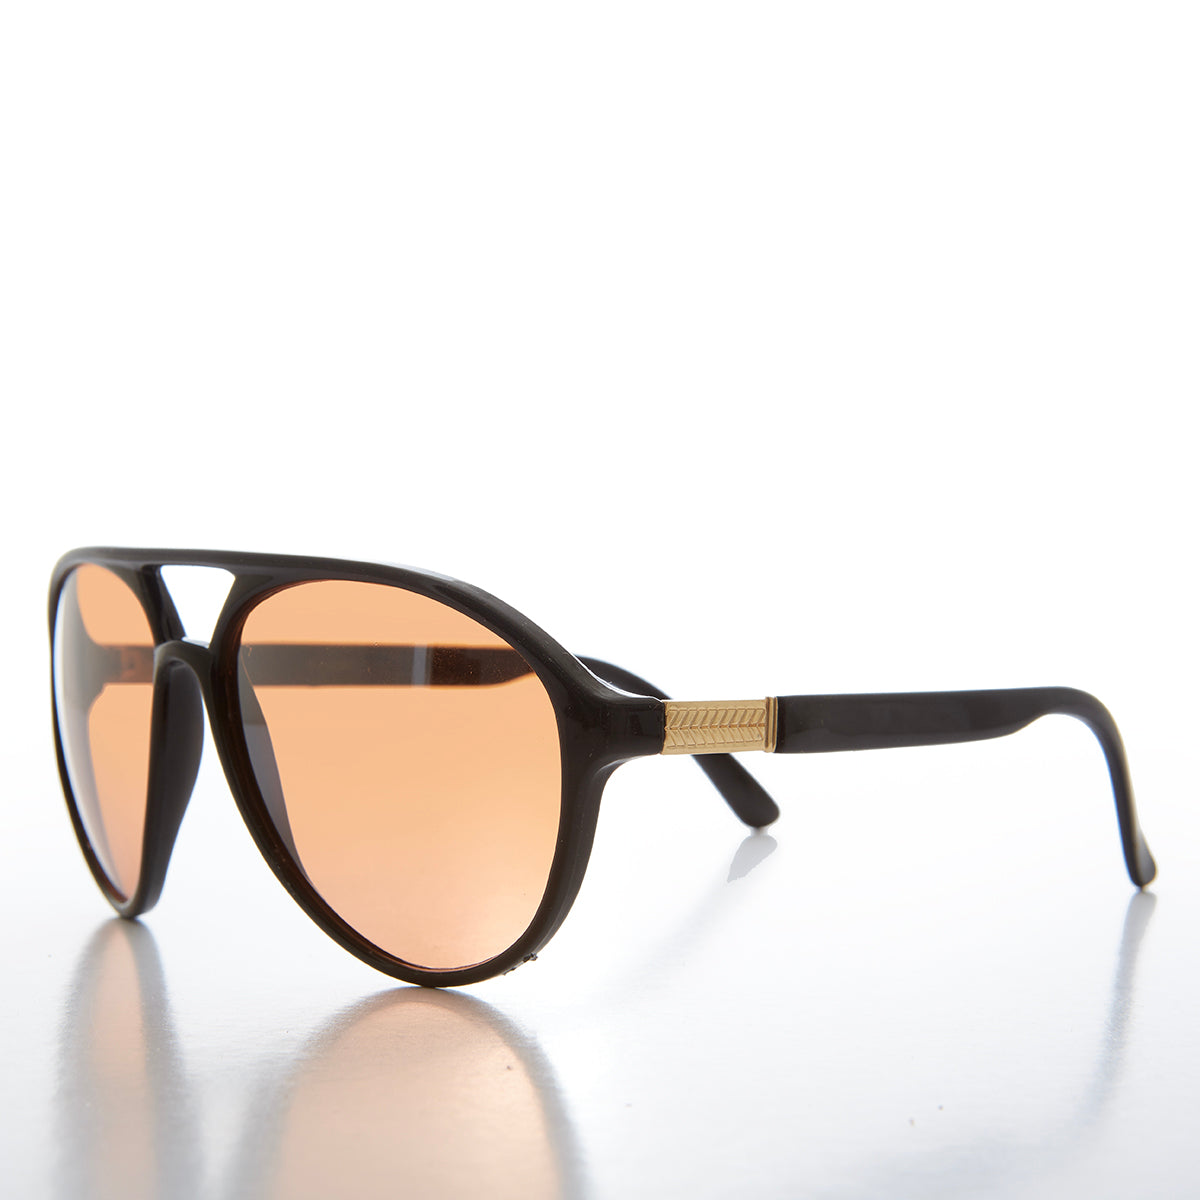 Classic Teardrop Pilot Sunglasses With Copper Lens